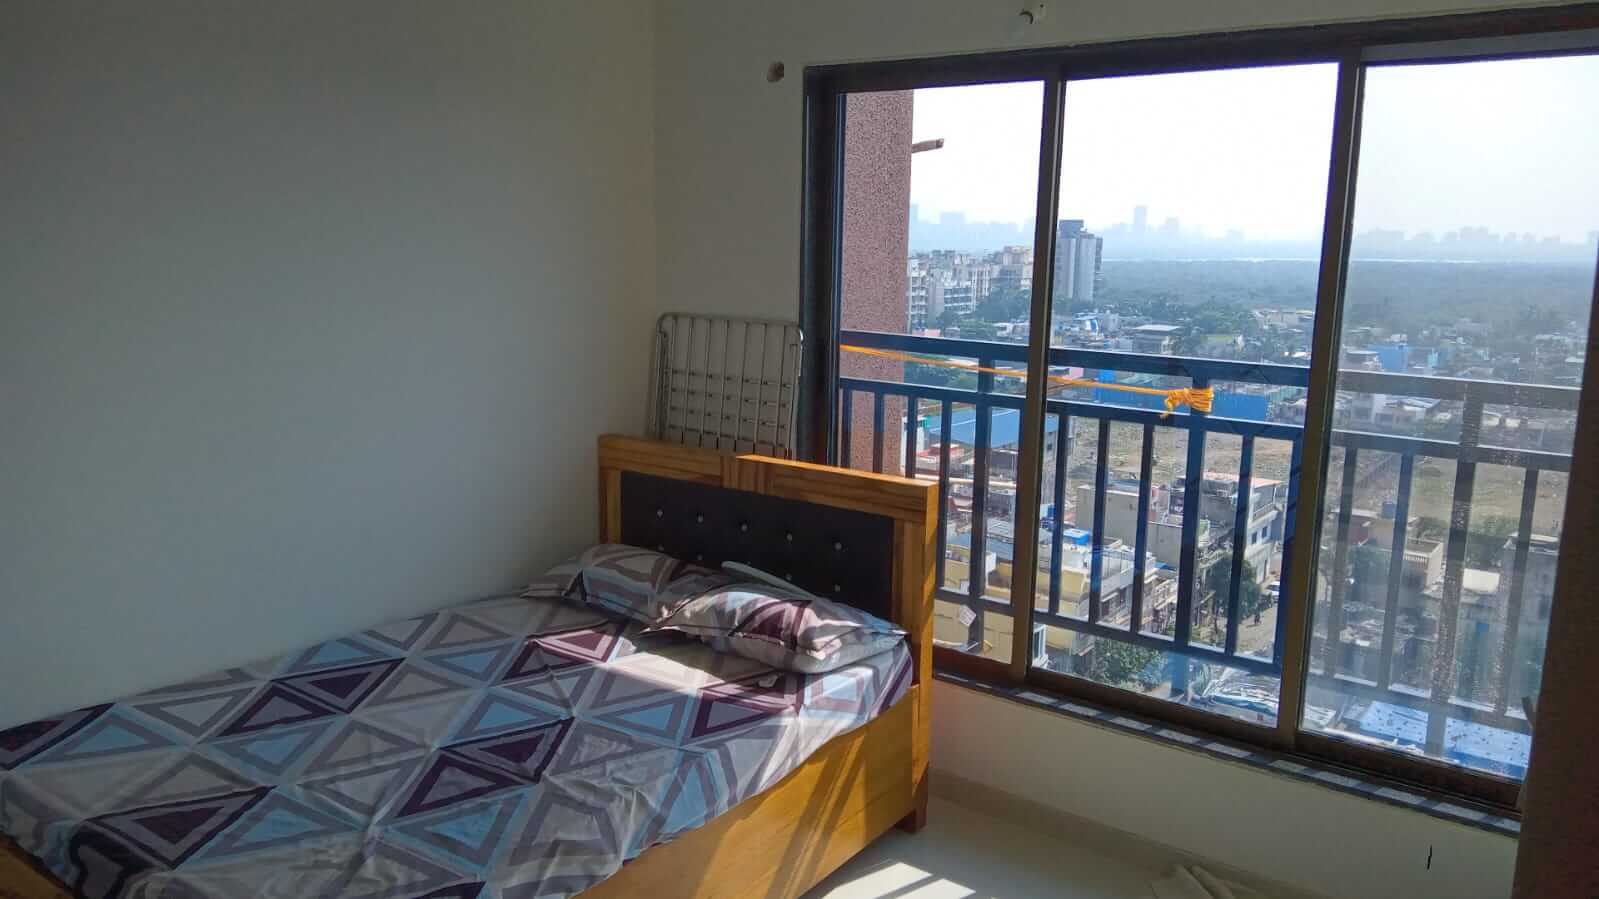 1 BHK Apartment / Flat for Rent 355 Sq. Feet at Mumbai
, Malad West